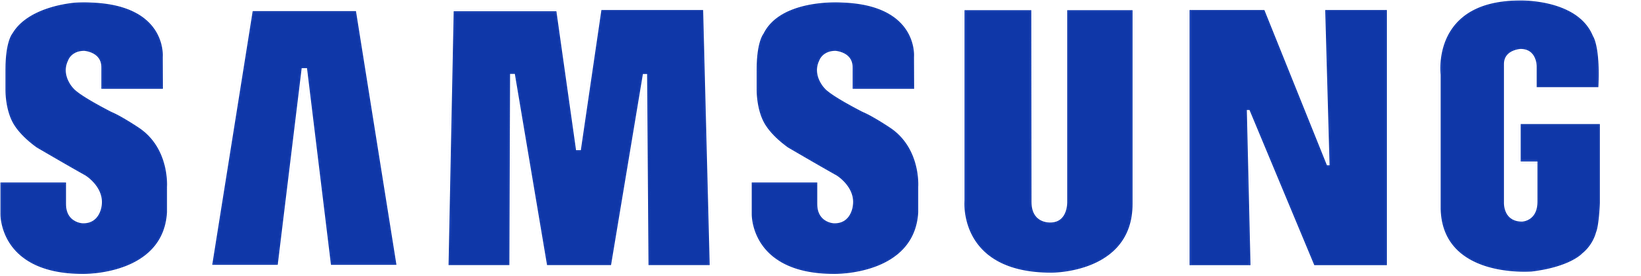 Samsung Logo Png - Free Transparent PNG Logos